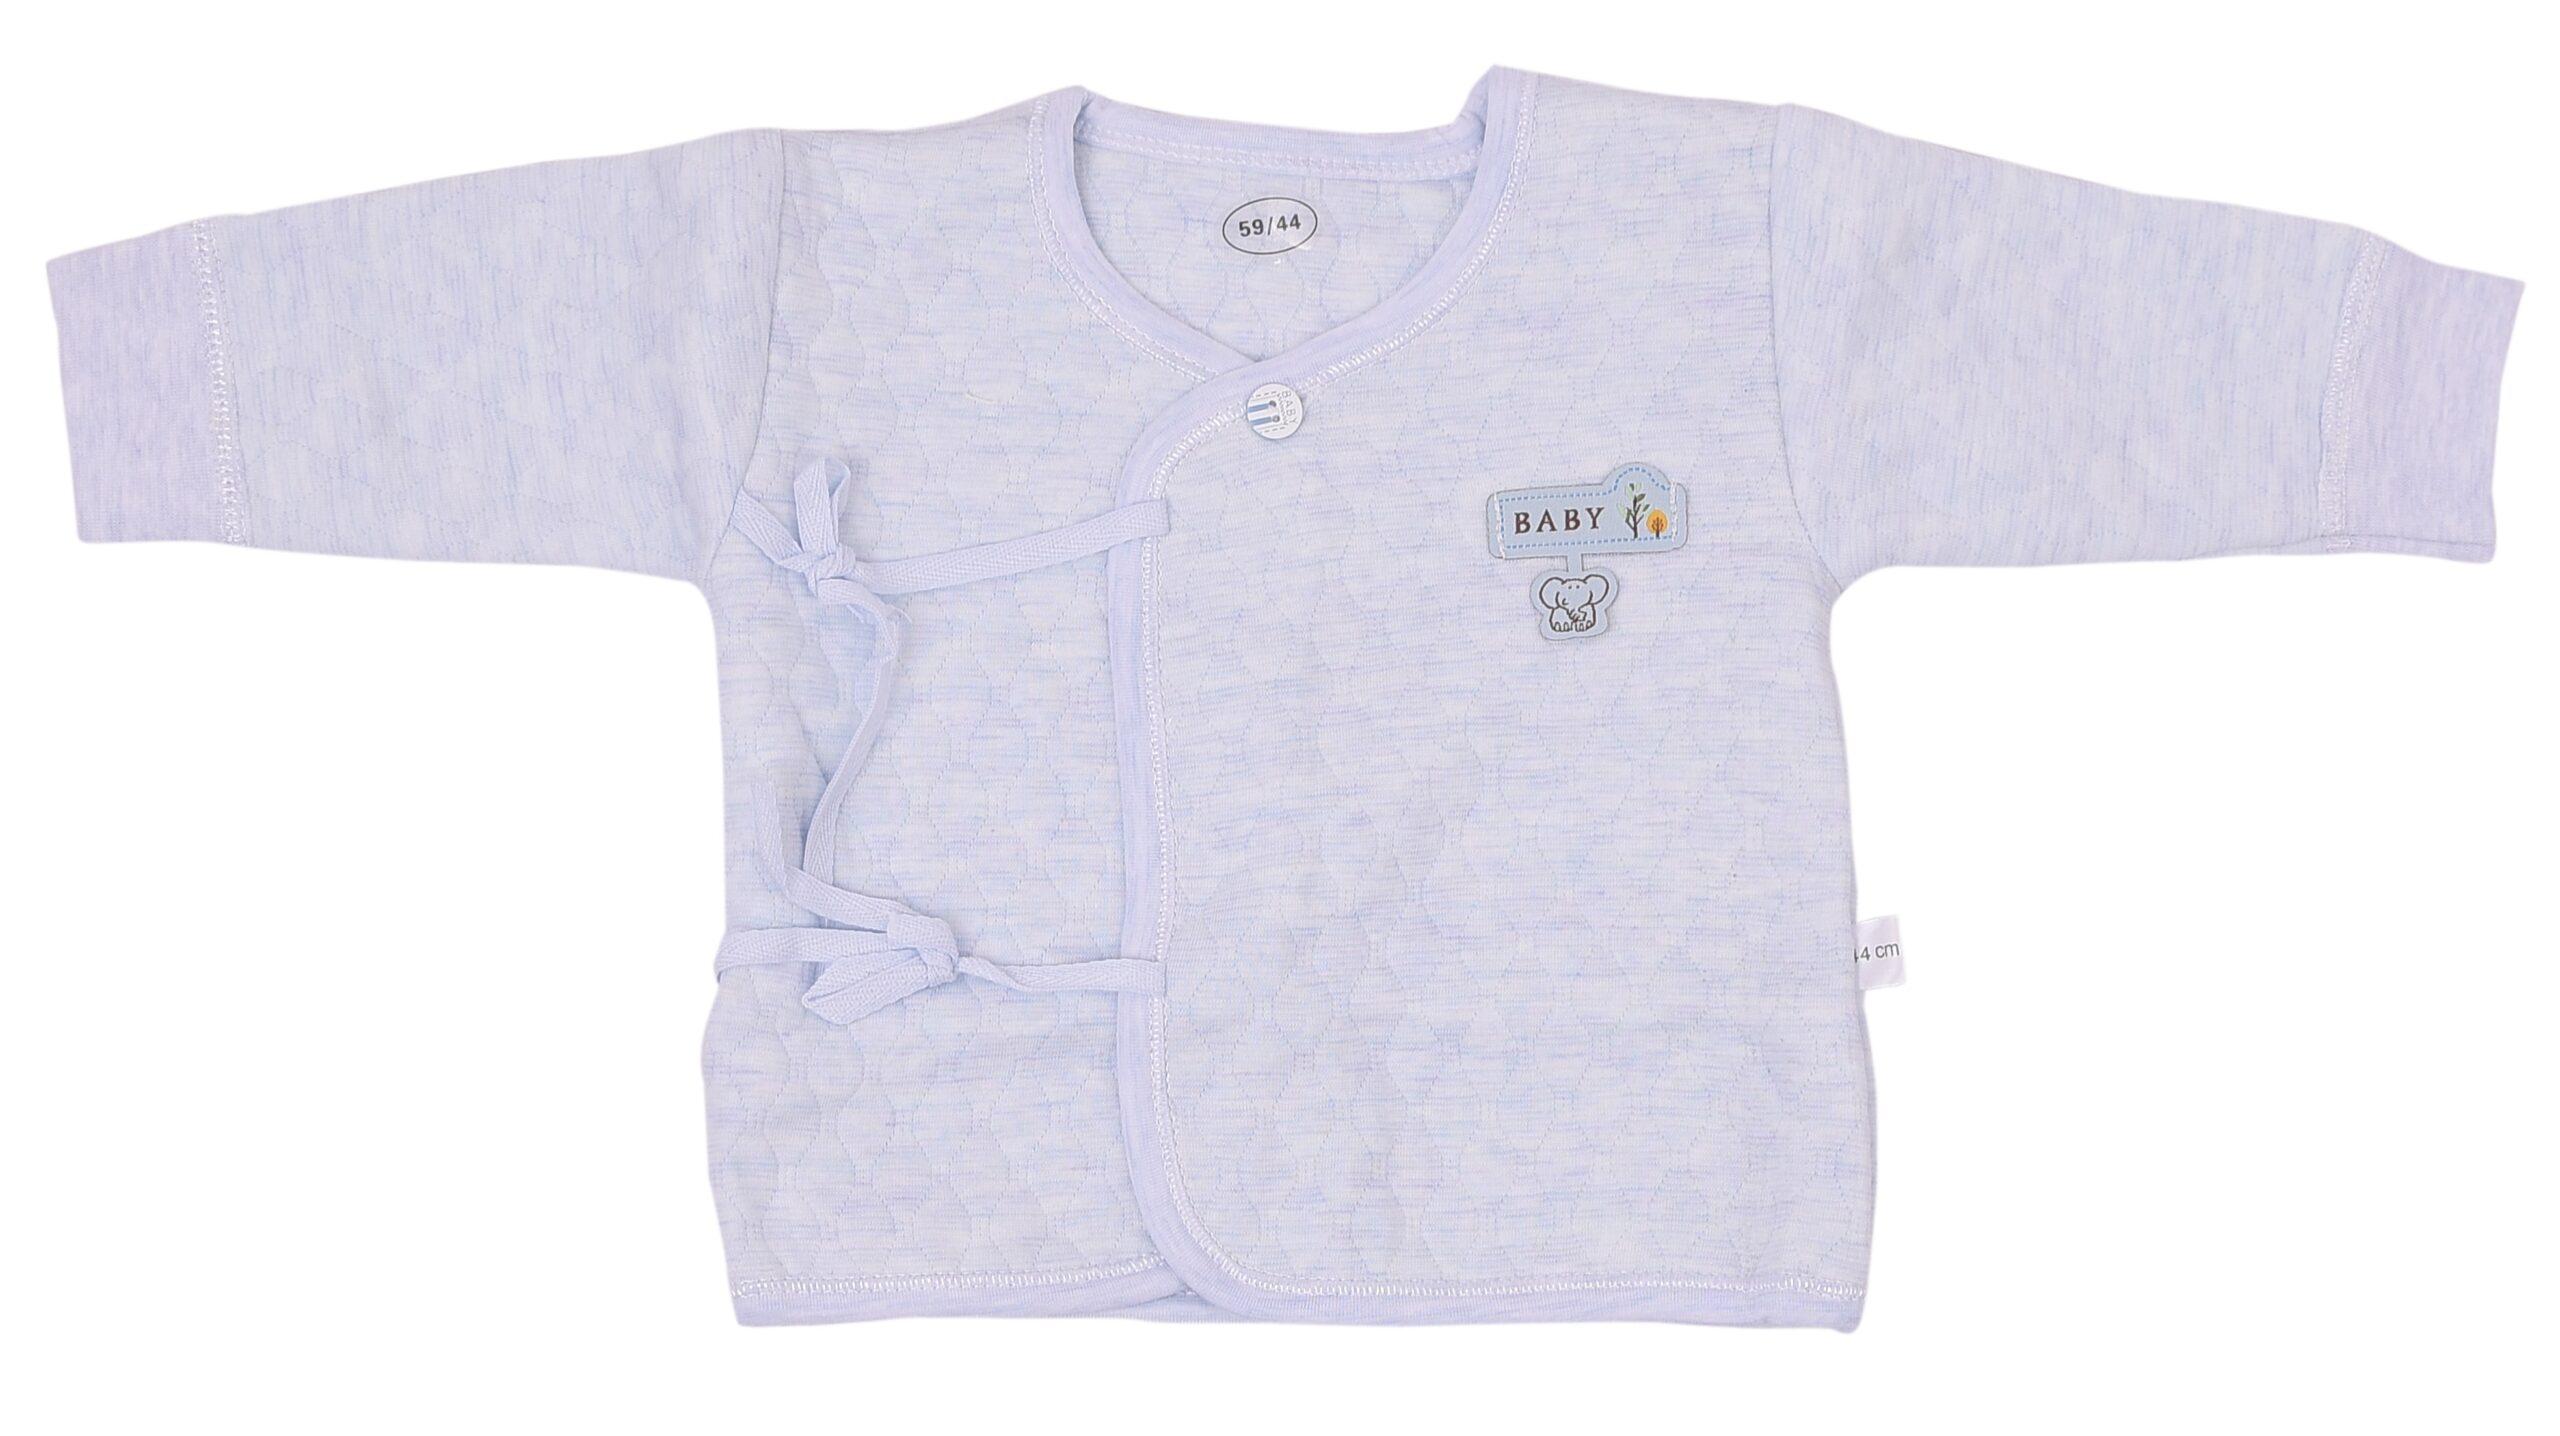 Baby's Warm Unisex Cotton Pant and Shirt Set - Blue